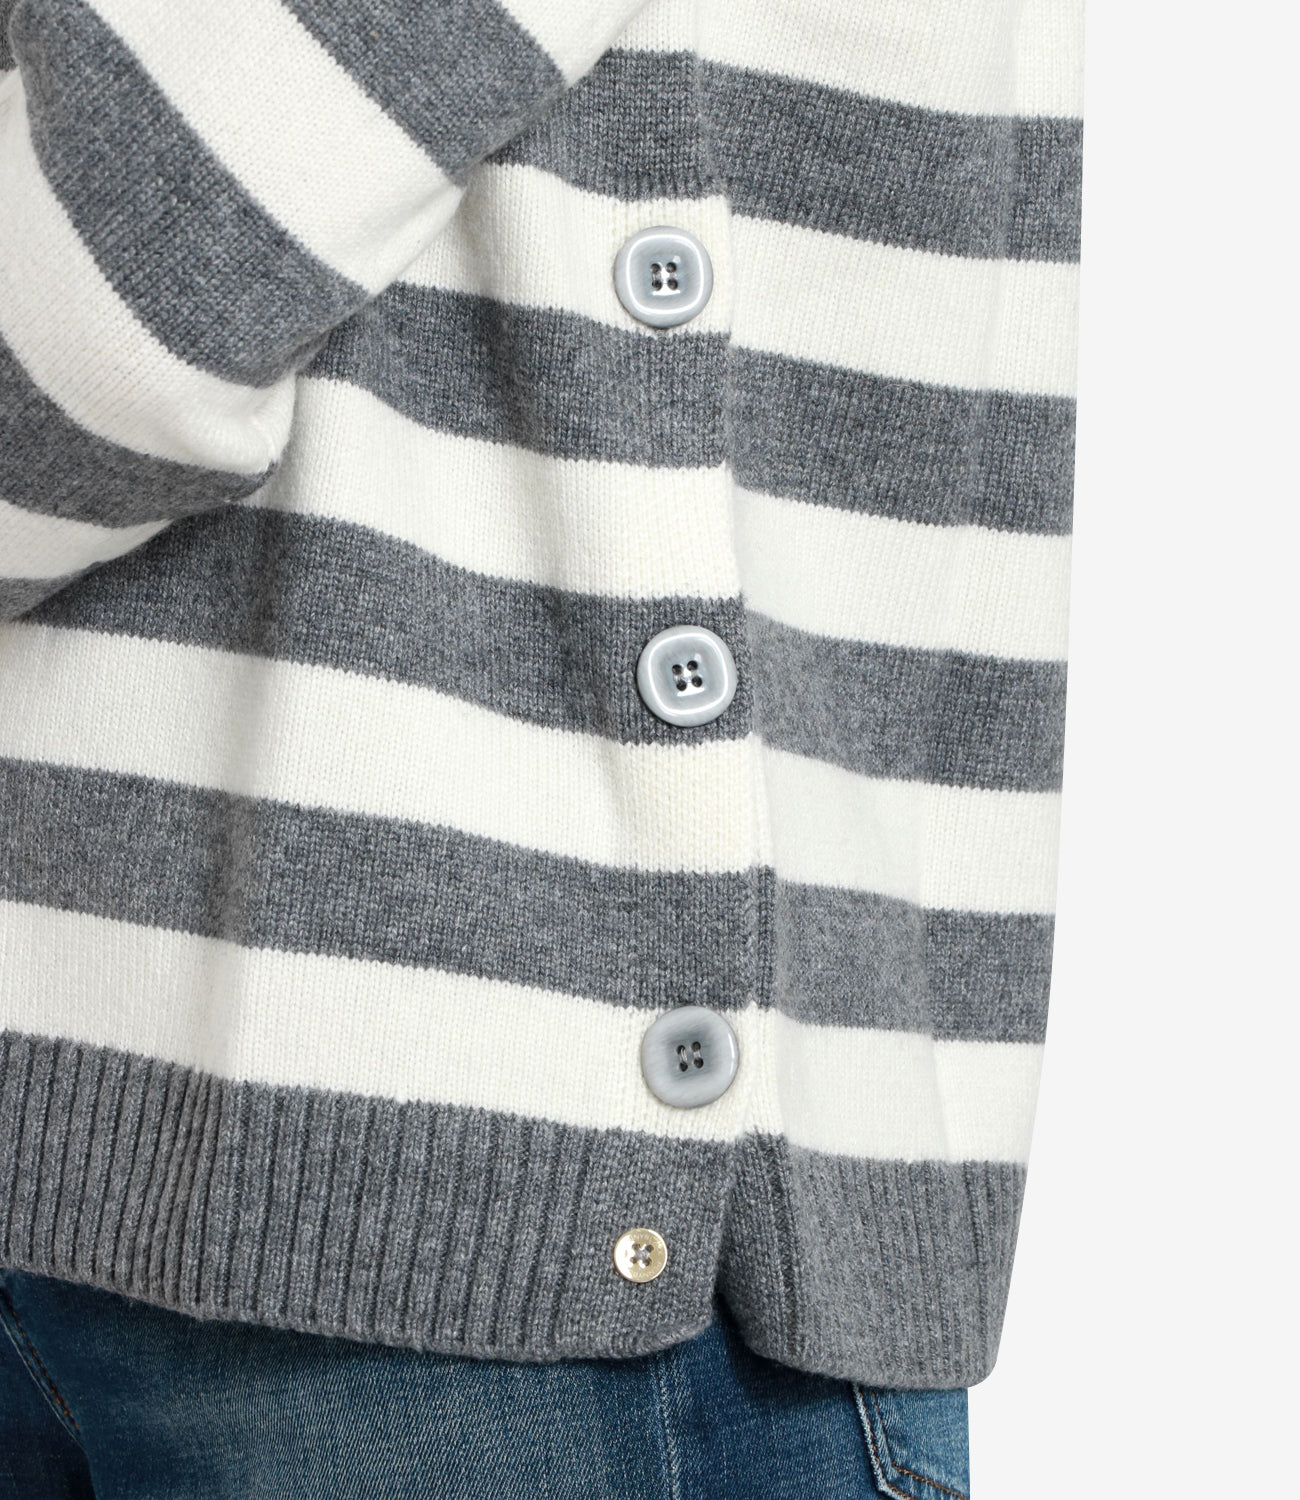 Pennyblack | Cream and Gray Sweater